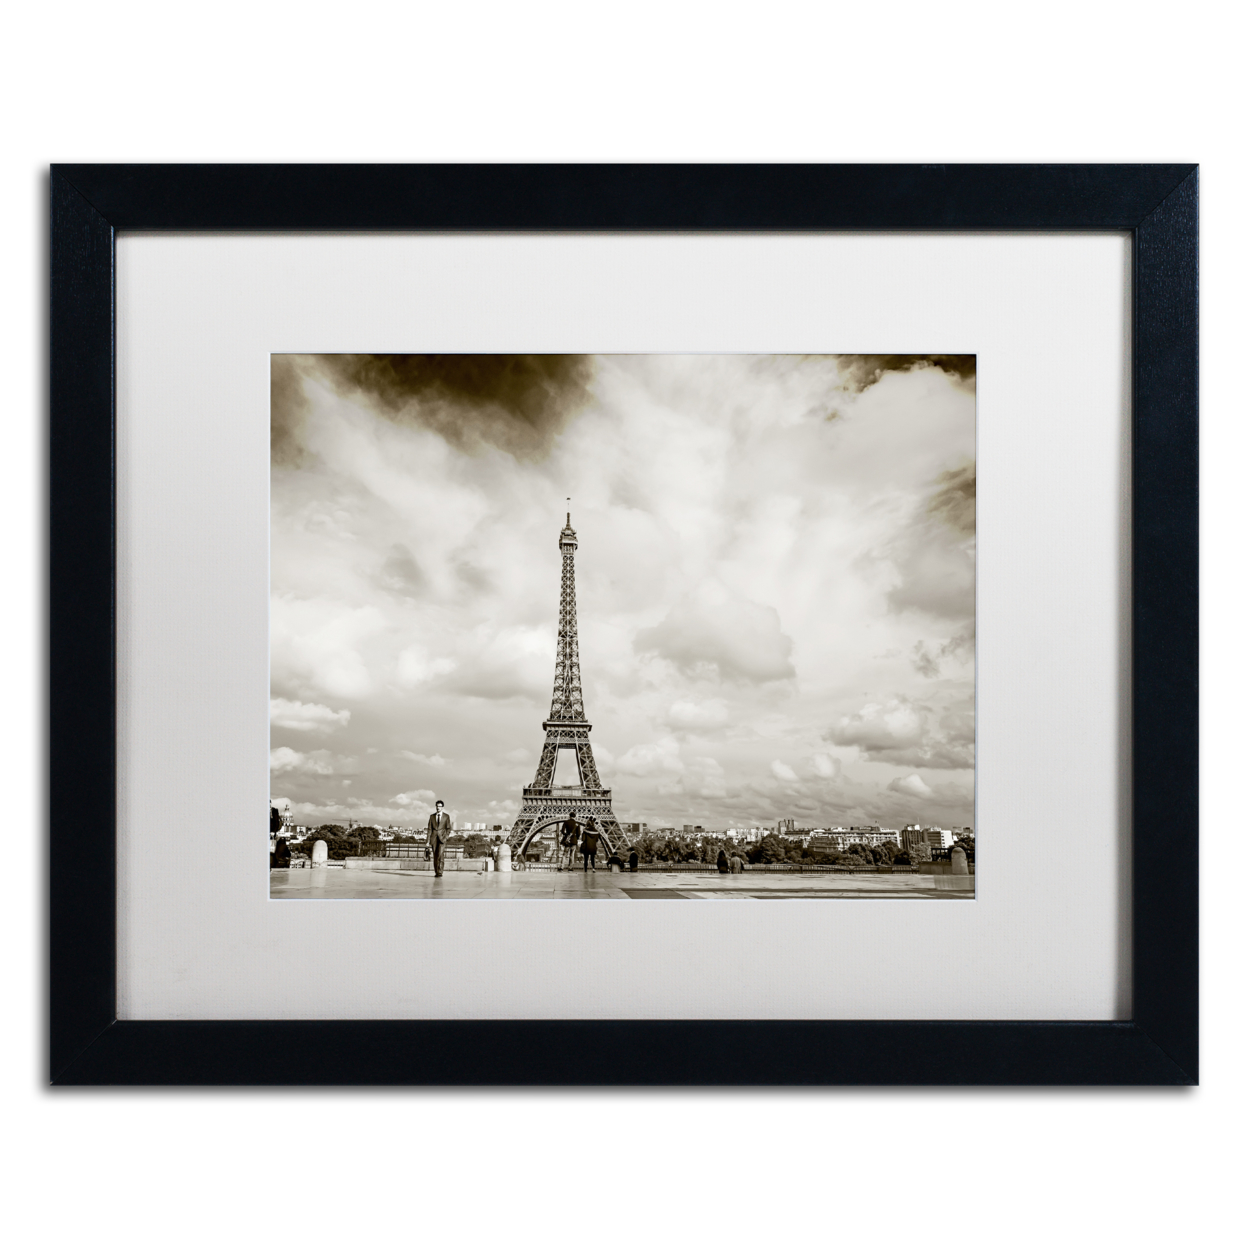 Preston 'Paris Eiffel Tower And Man' Black Wooden Framed Art 18 X 22 Inches